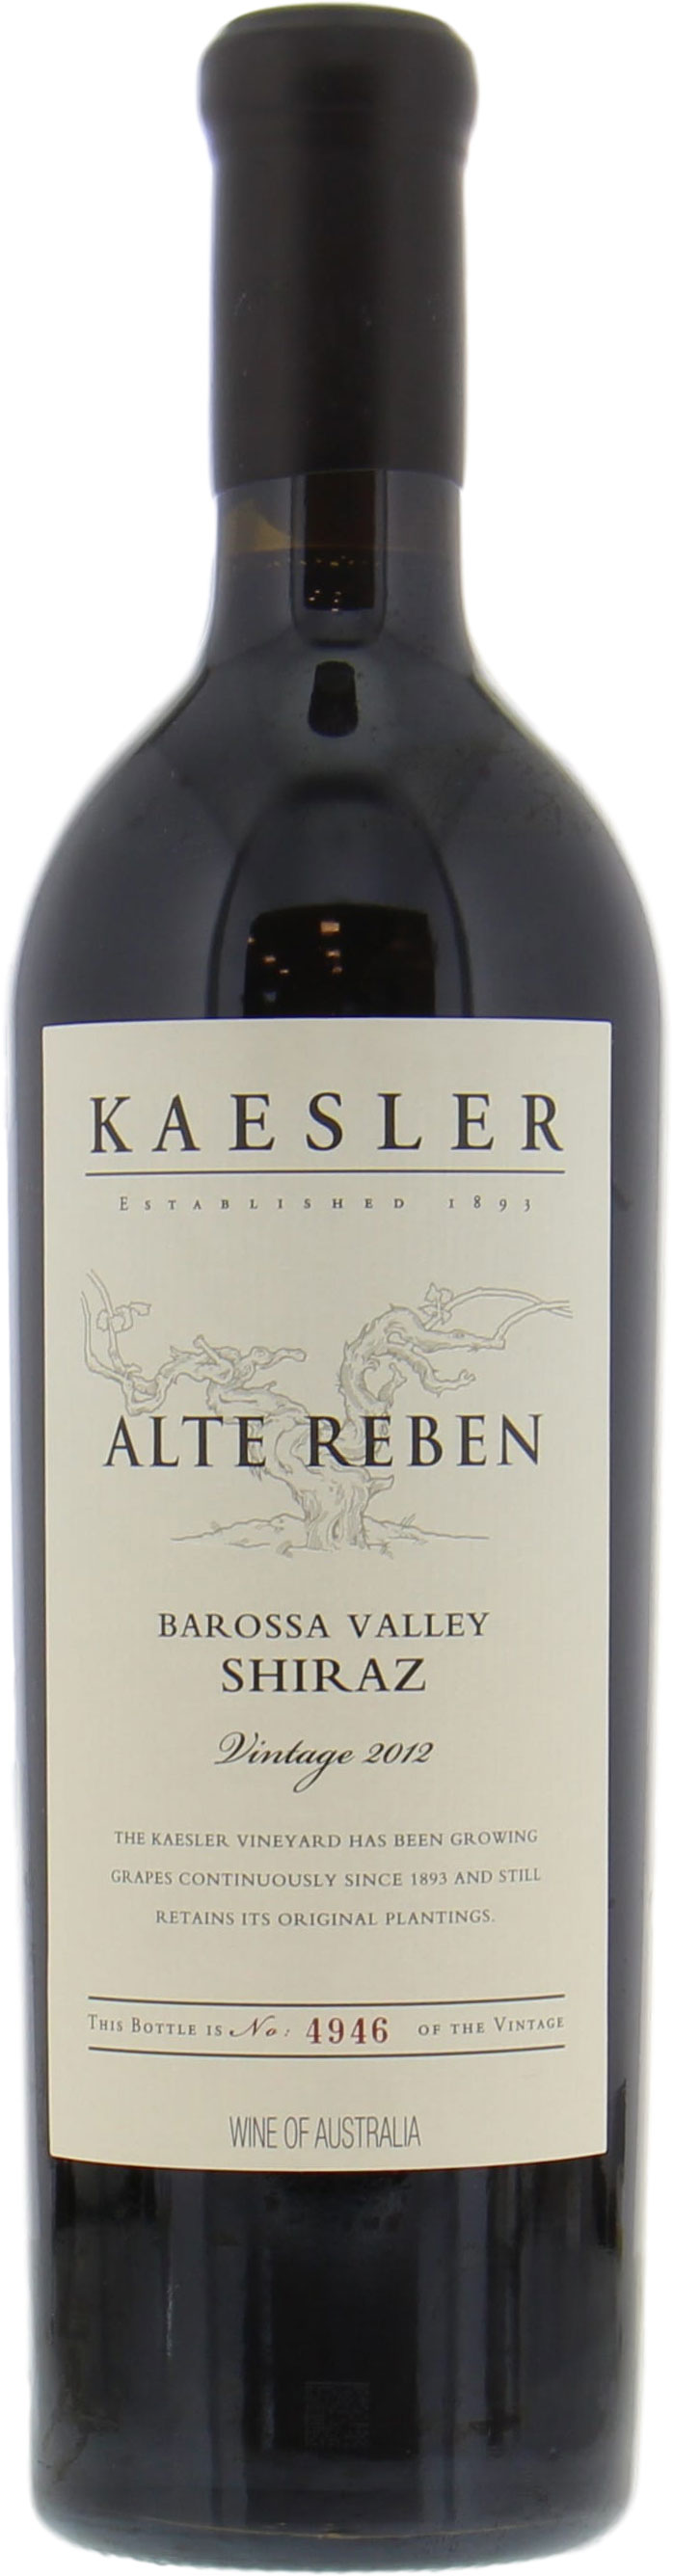 Kaesler - Alte Reben Shiraz 2012 Perfect